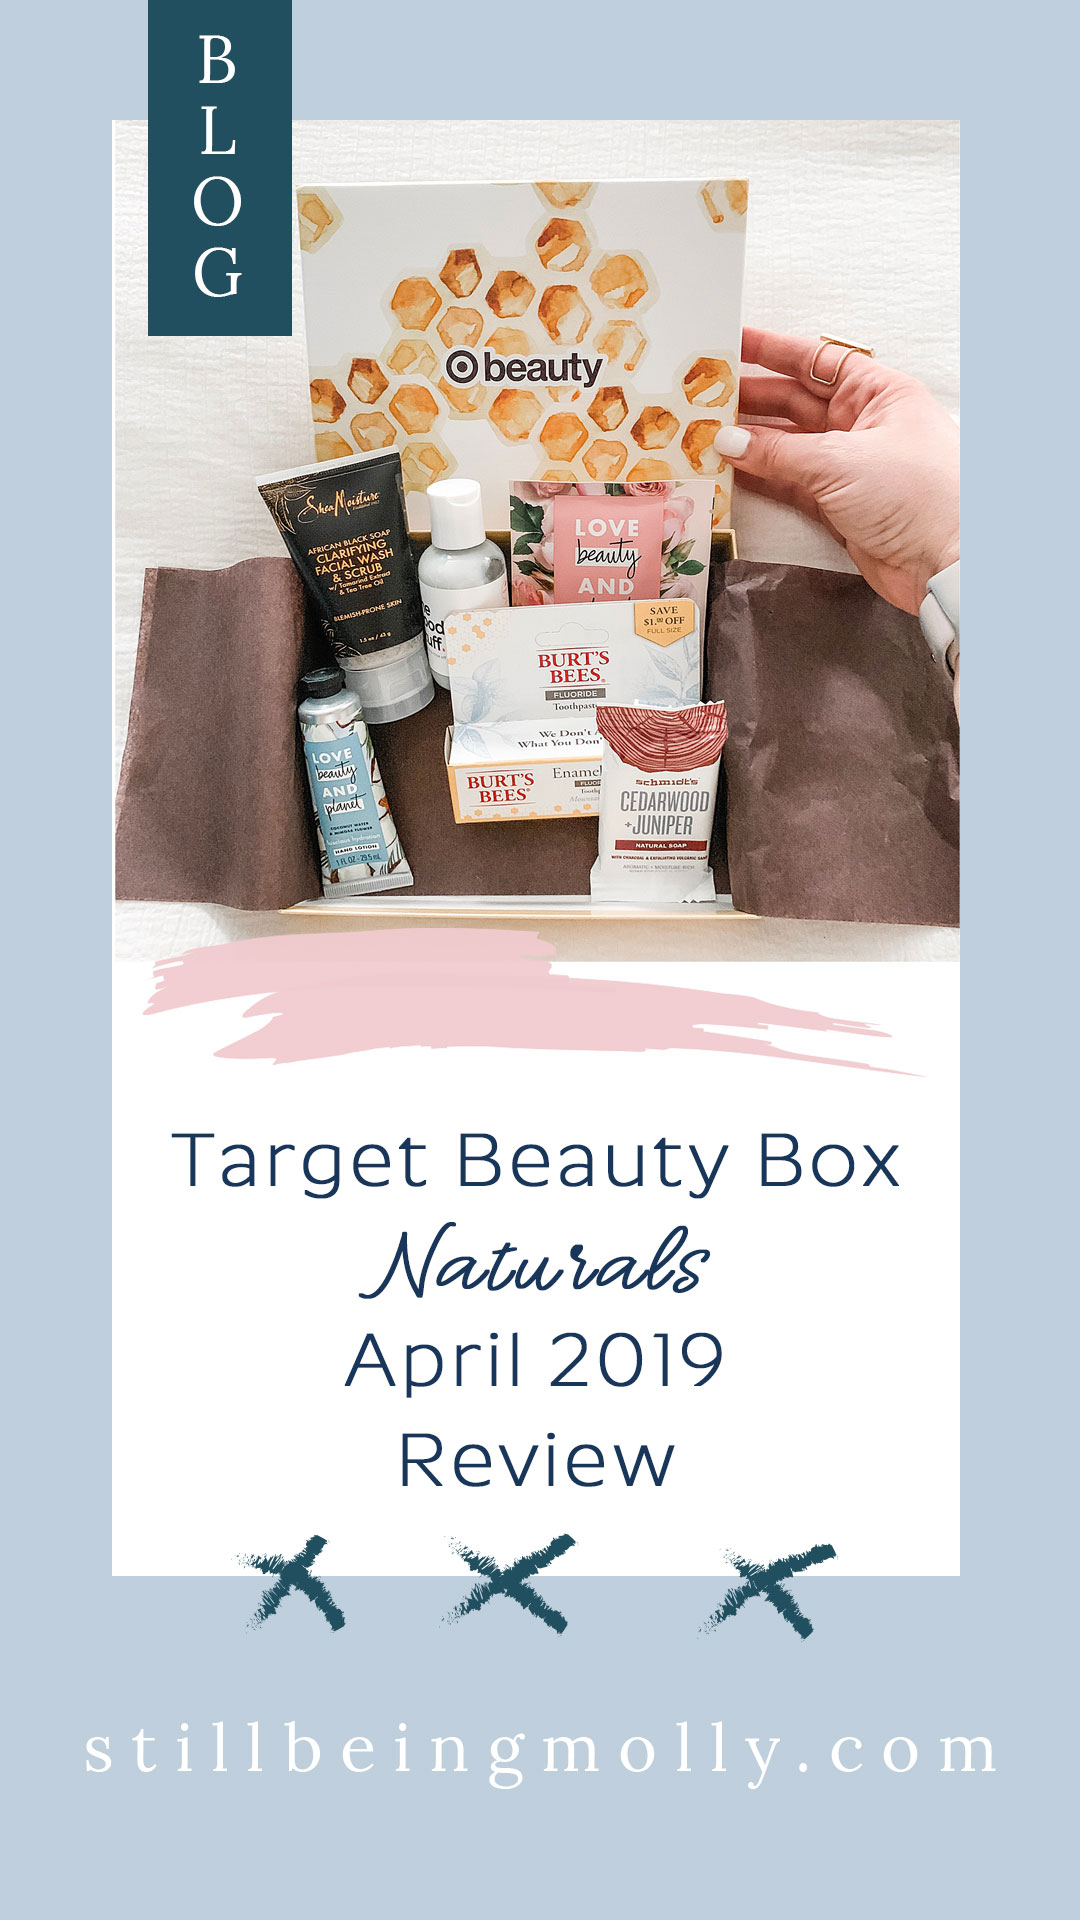 Target Beauty Box™ Review - April 2019 - Naturals (9)